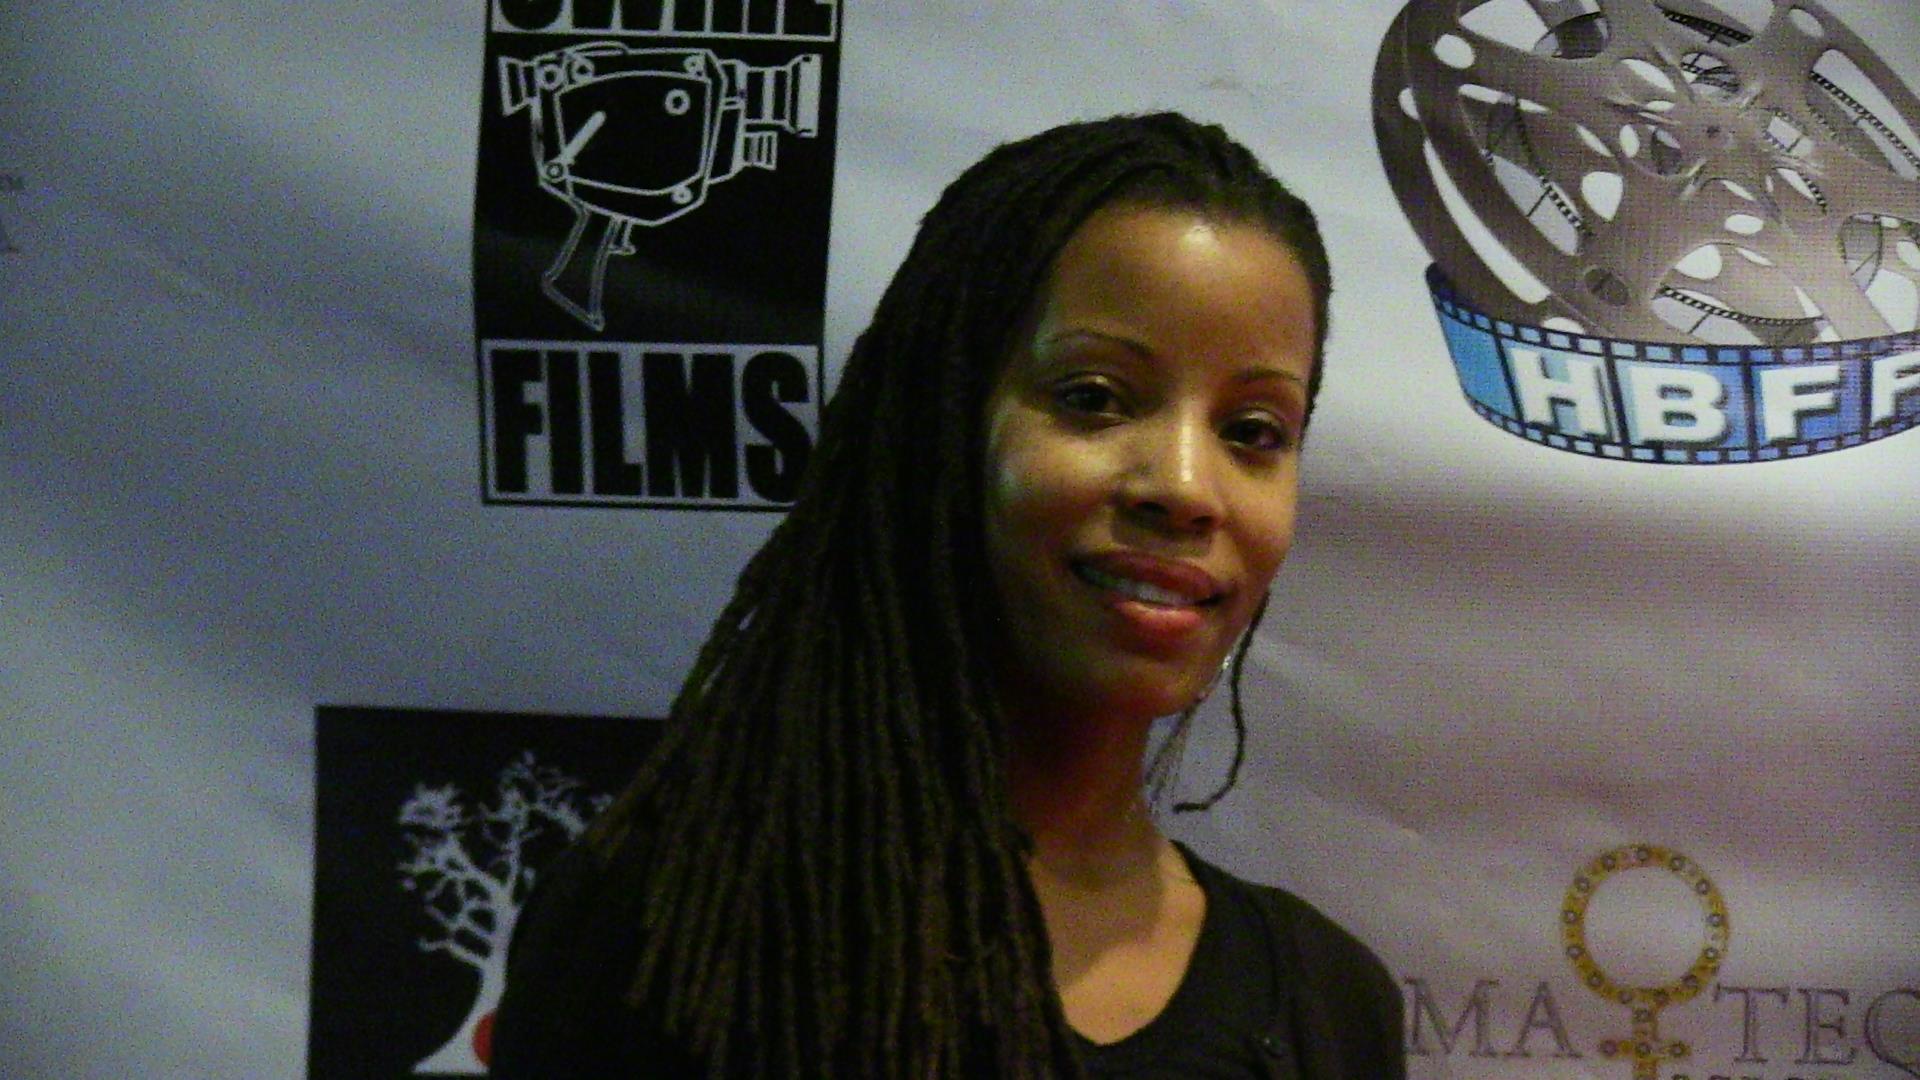 JD Walker, screenplay semi-finalist for The Postwoman, at The Hollywood Black Film Festival.